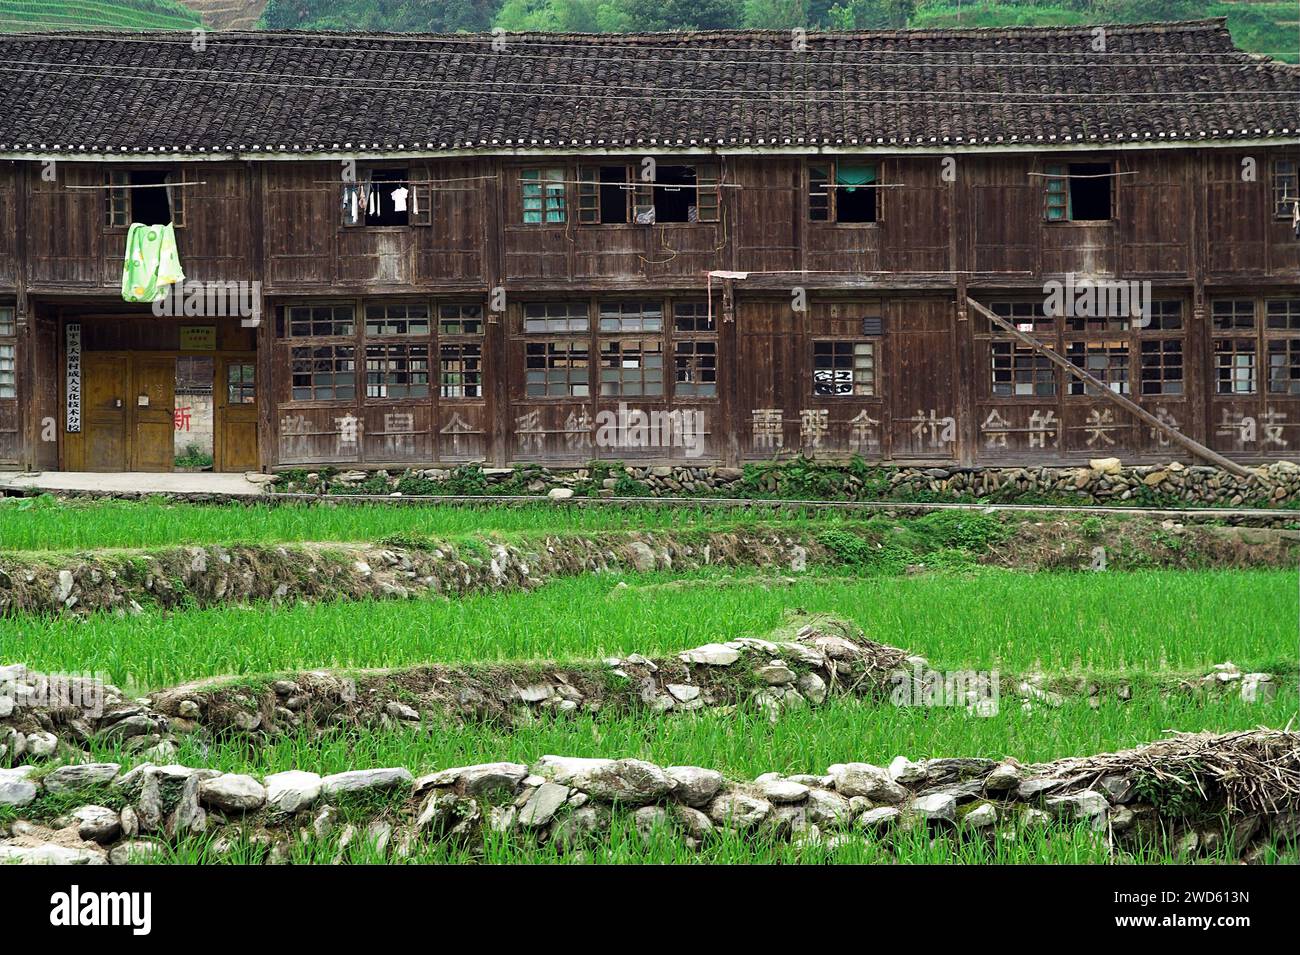 龙胜镇 (龙胜县) 中國 Longsheng, Dazhai Longji Ping'an Zhuang, Cina; grande edificio in legno in un villaggio cinese; Großes Holzgebäude in einem chinesischen Dorf Foto Stock